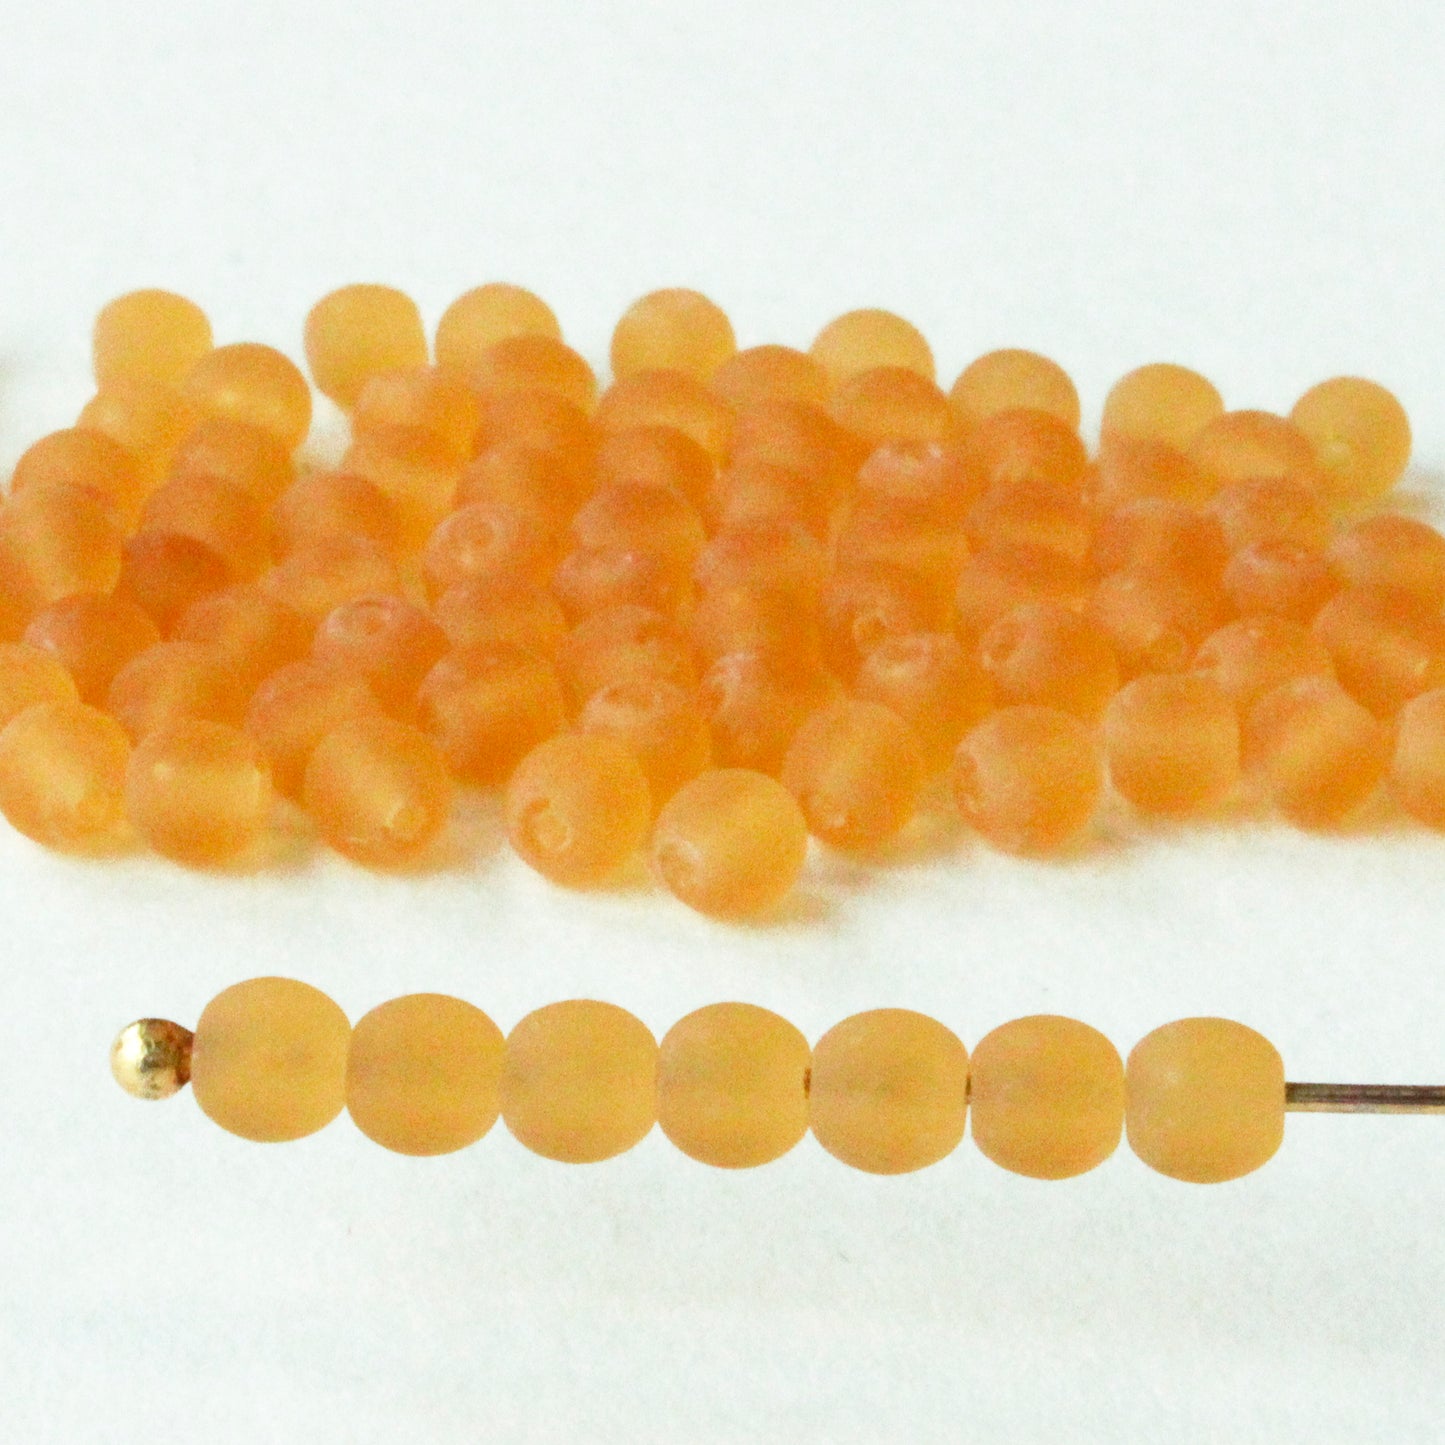 4mm Round Glass Beads - Light Amber Matte - 100 Beads